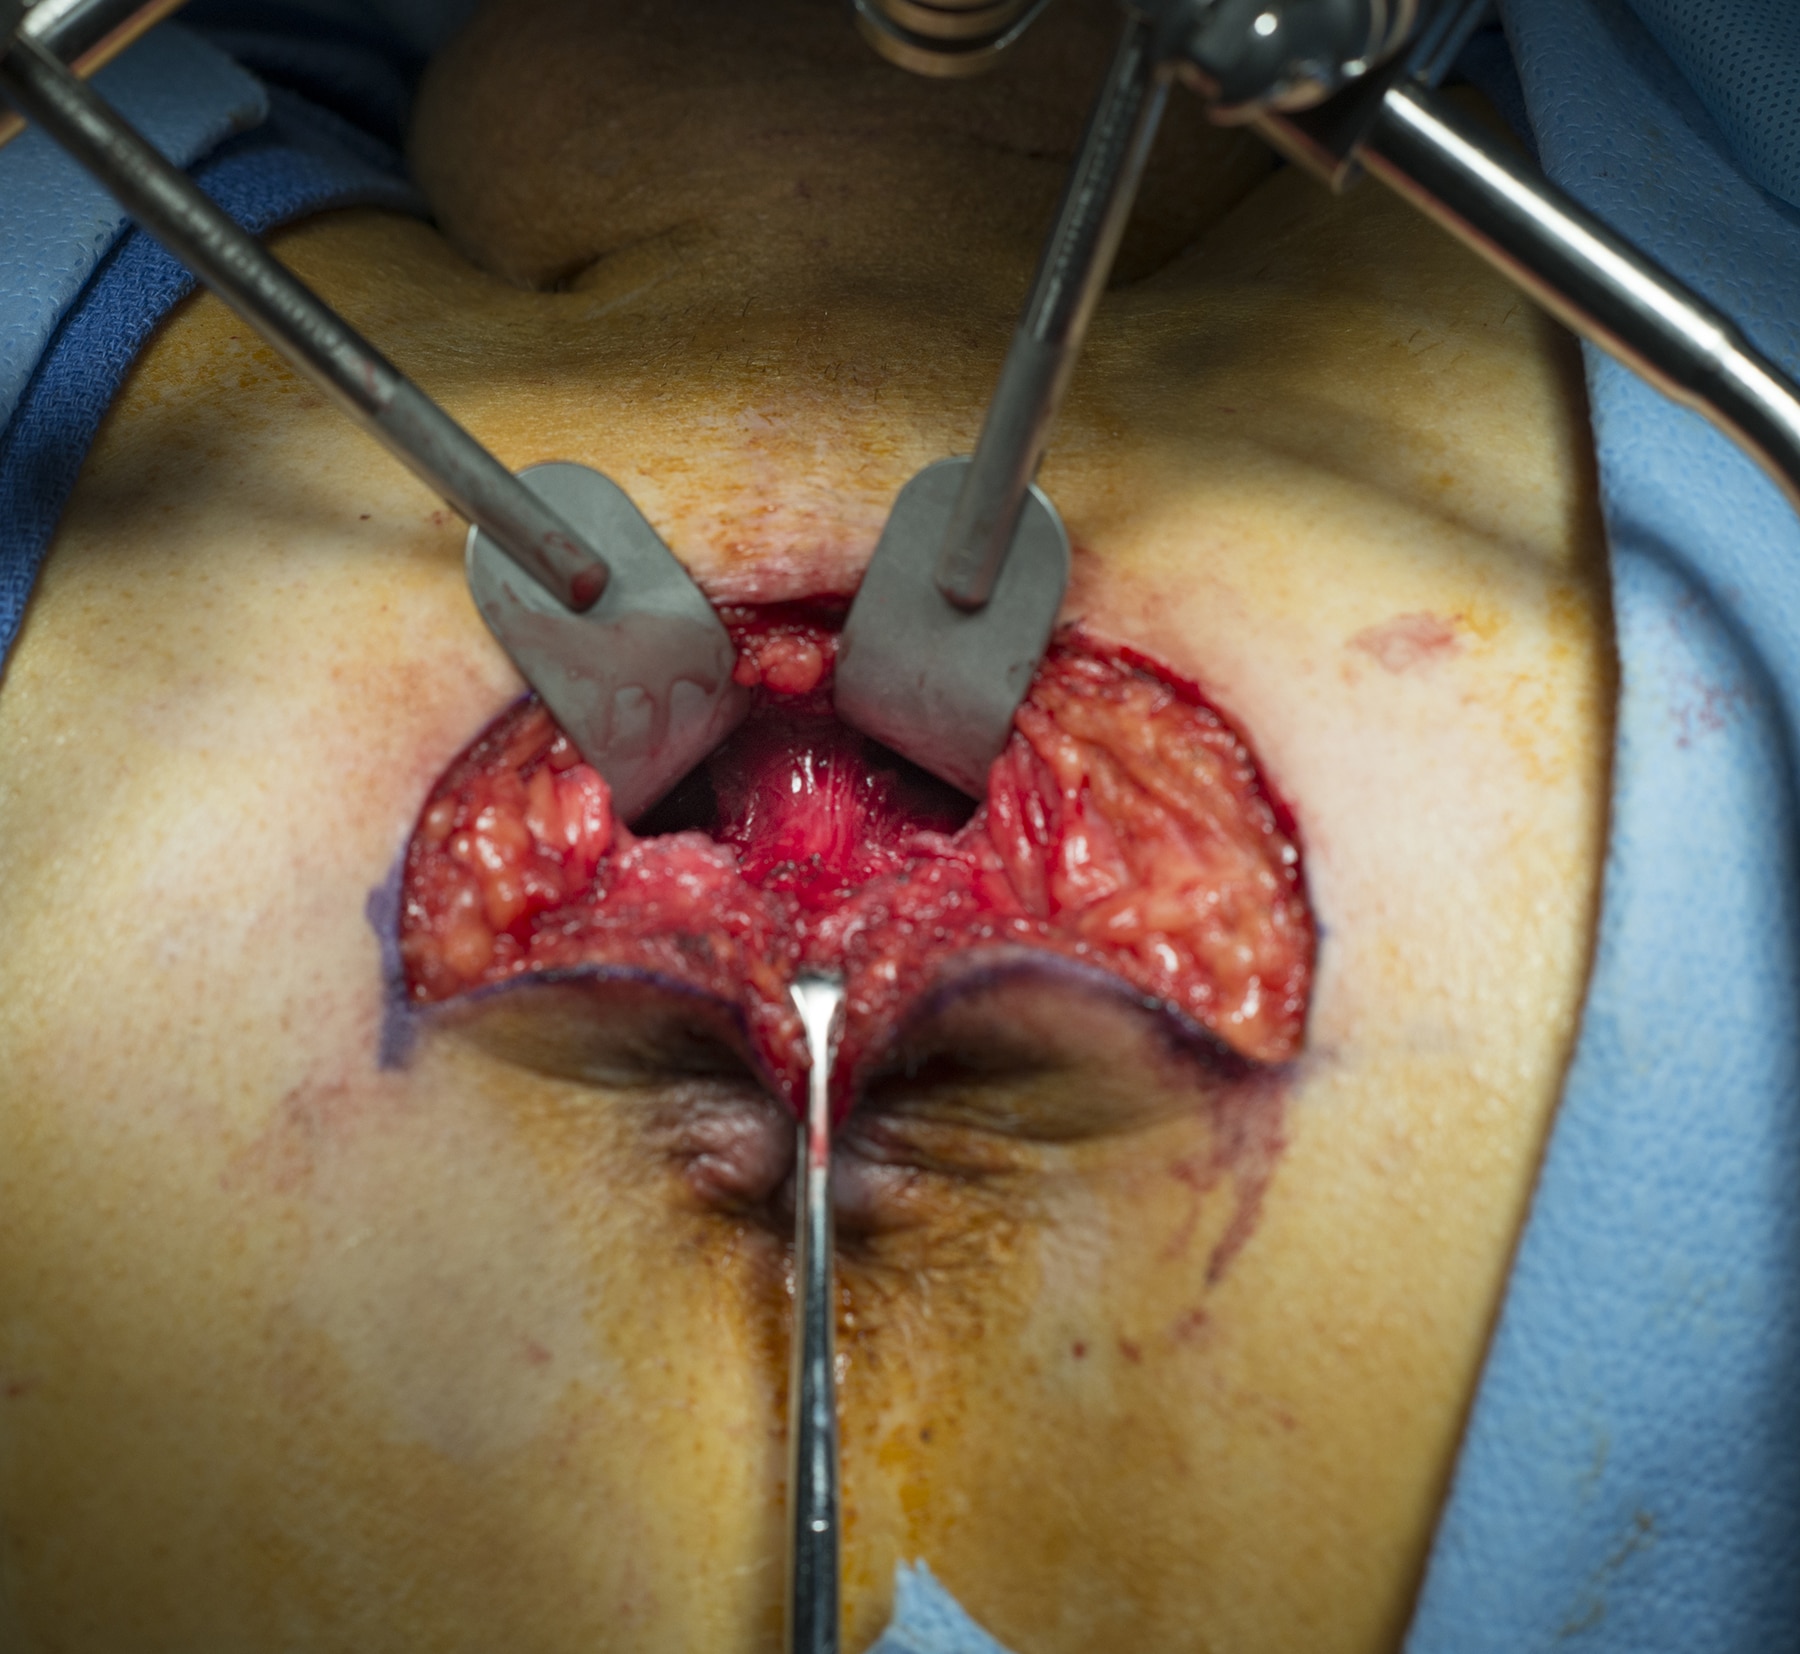 Radical perineal prostatectomy